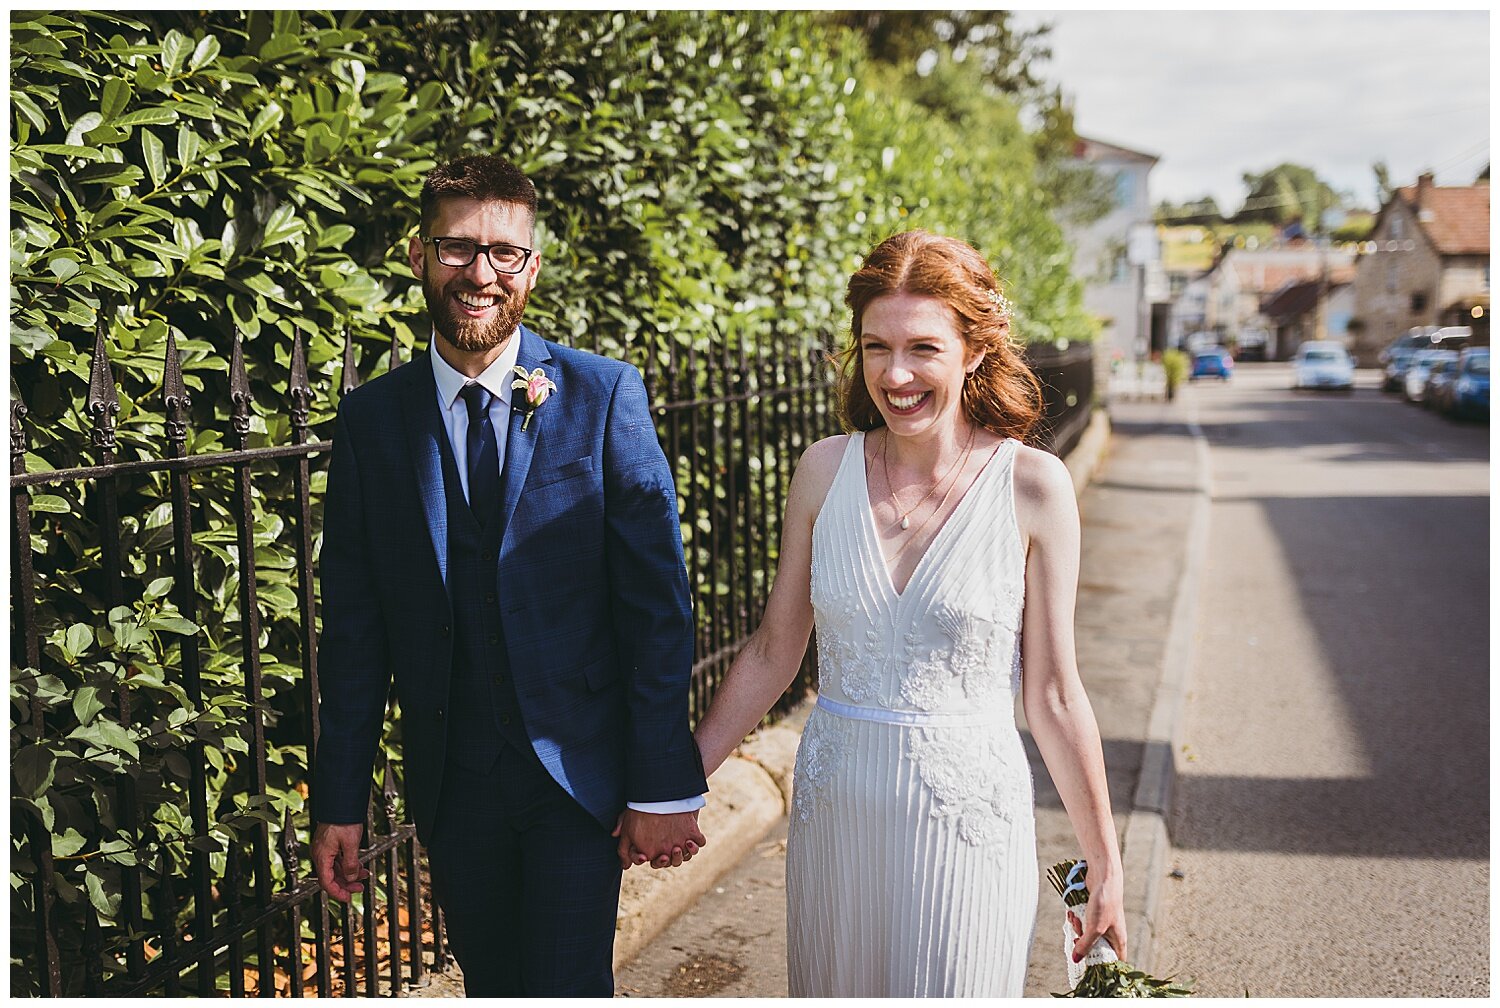 Documentary wedding photography in Wedmore